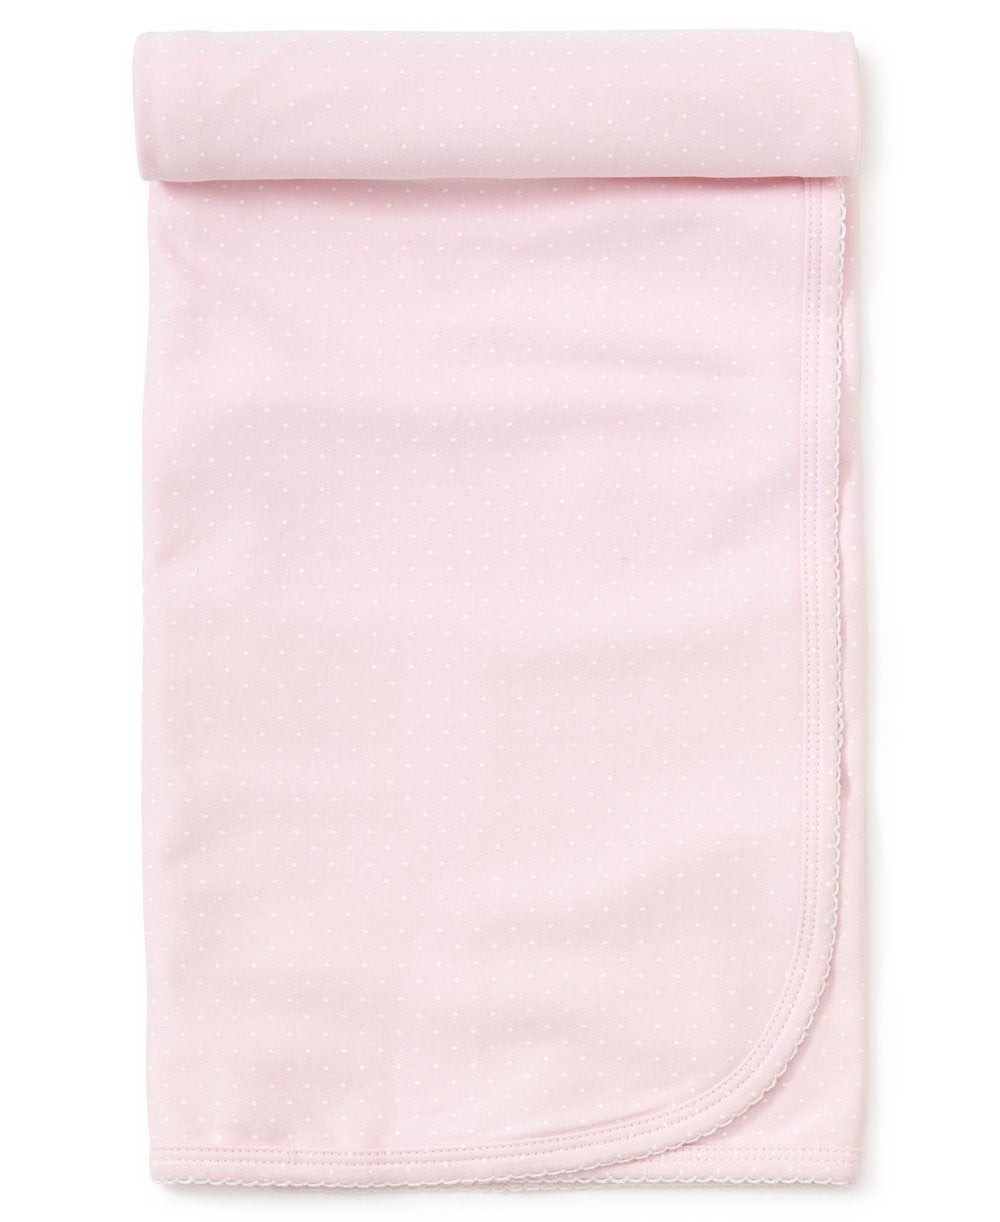 Kissy Kissy - New Kissy Dots Print Blanket - Pink/White